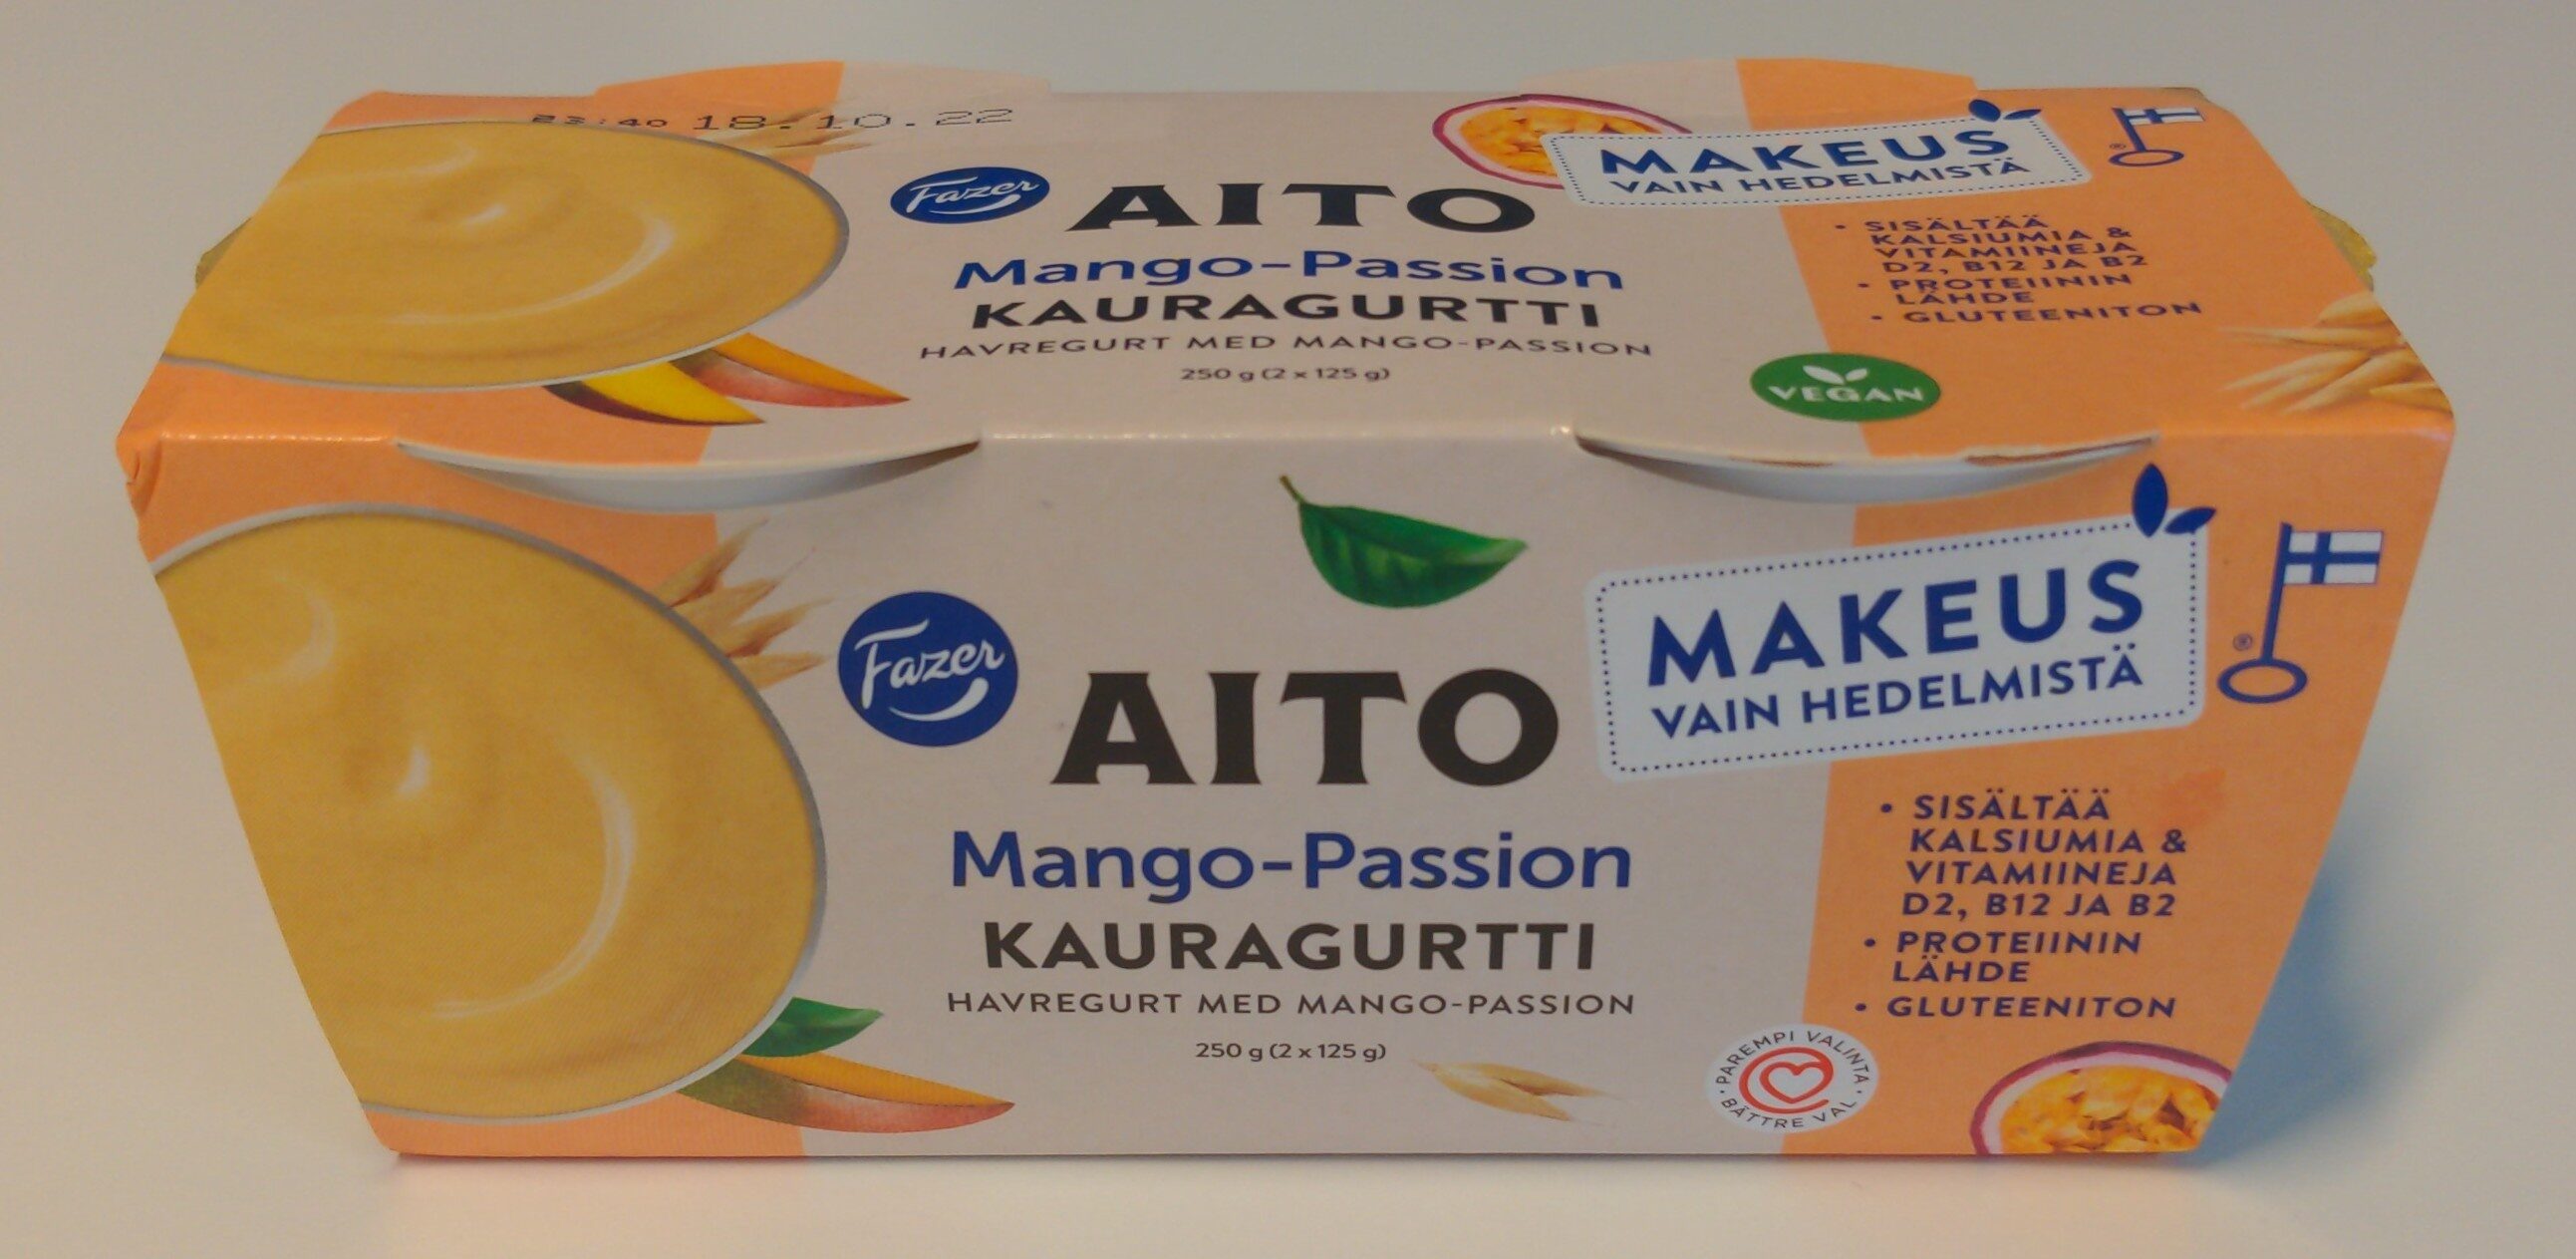 Aito kauragurtti mango-passion - Tuote